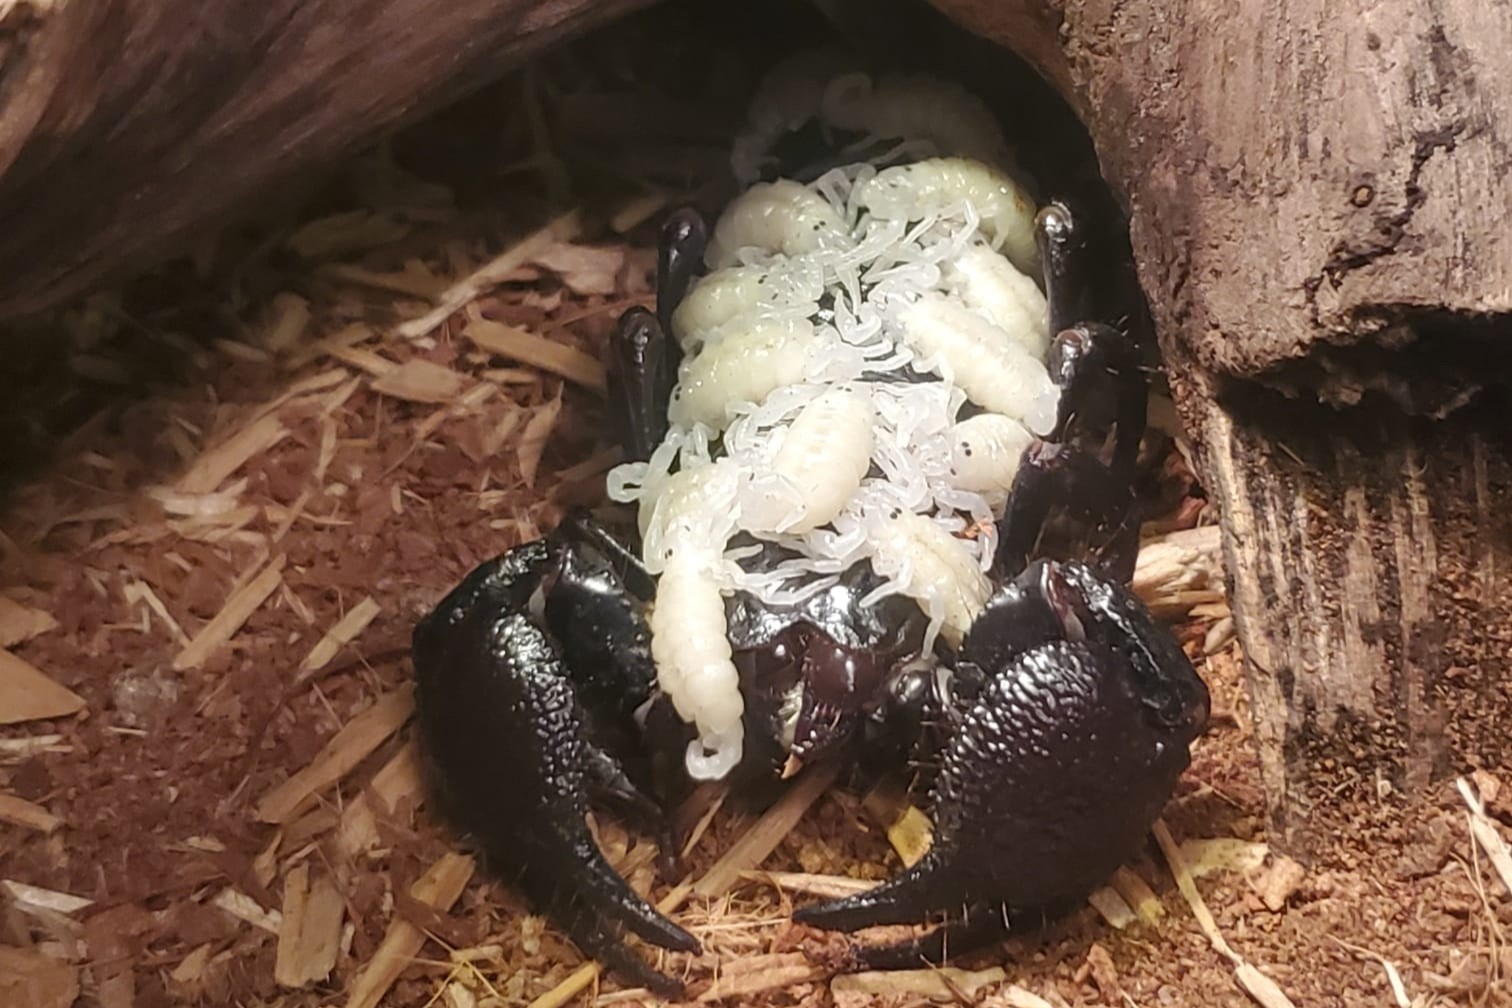 Emperor Scorpion - Cincinnati Zoo & Botanical Garden